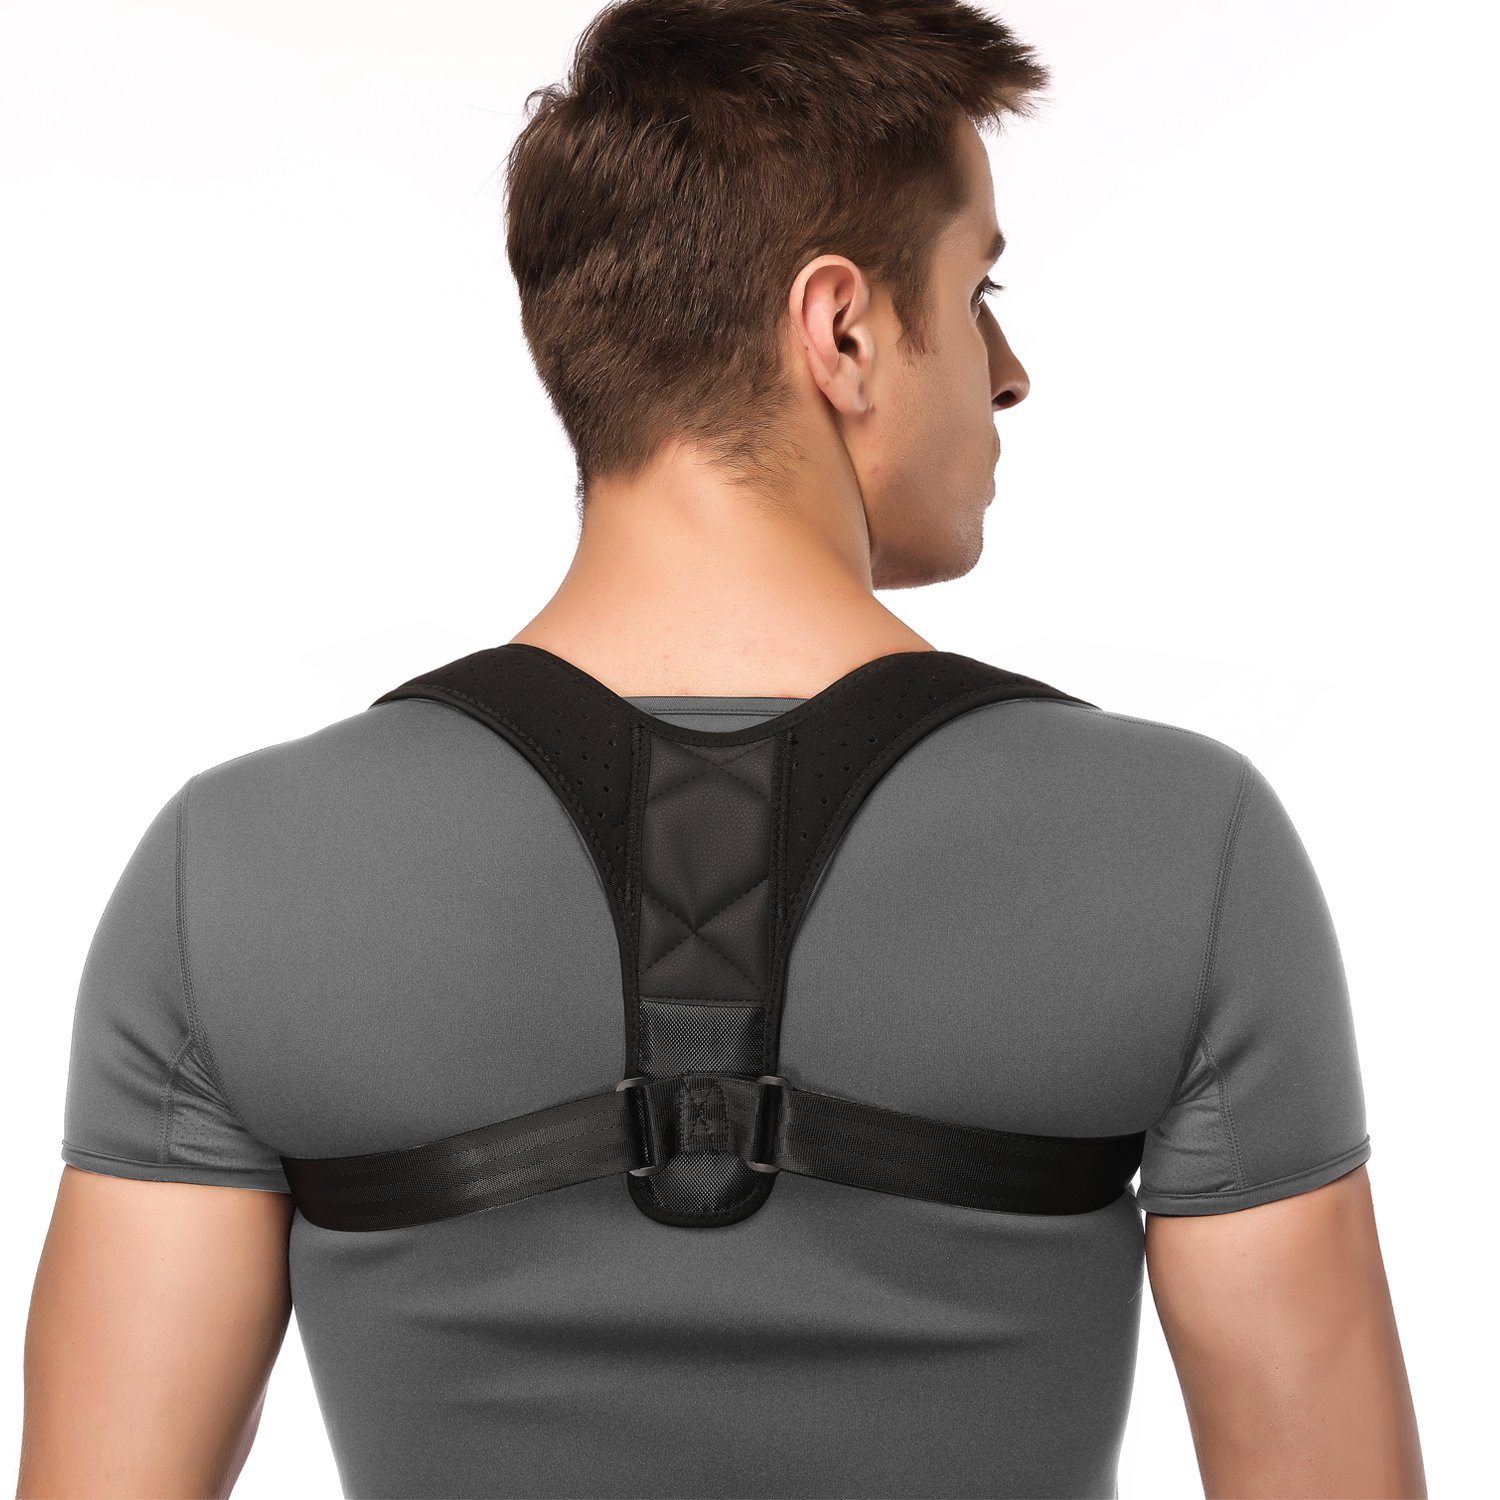 Back Brace Posture Corrector Clavicle Support Brace Medical Device to  Improve Bad Posture, Thoracic Kyphosis, Shoulder Alignment, Upper Back Pain